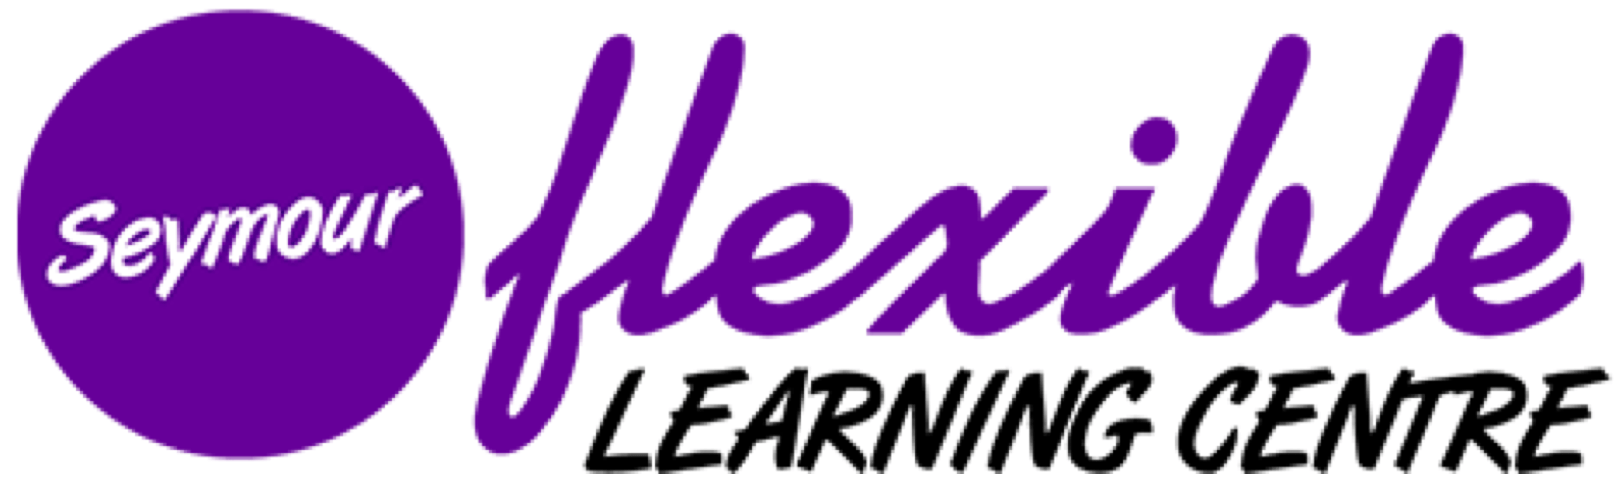 Seymour Flexible Learning Centre Logo